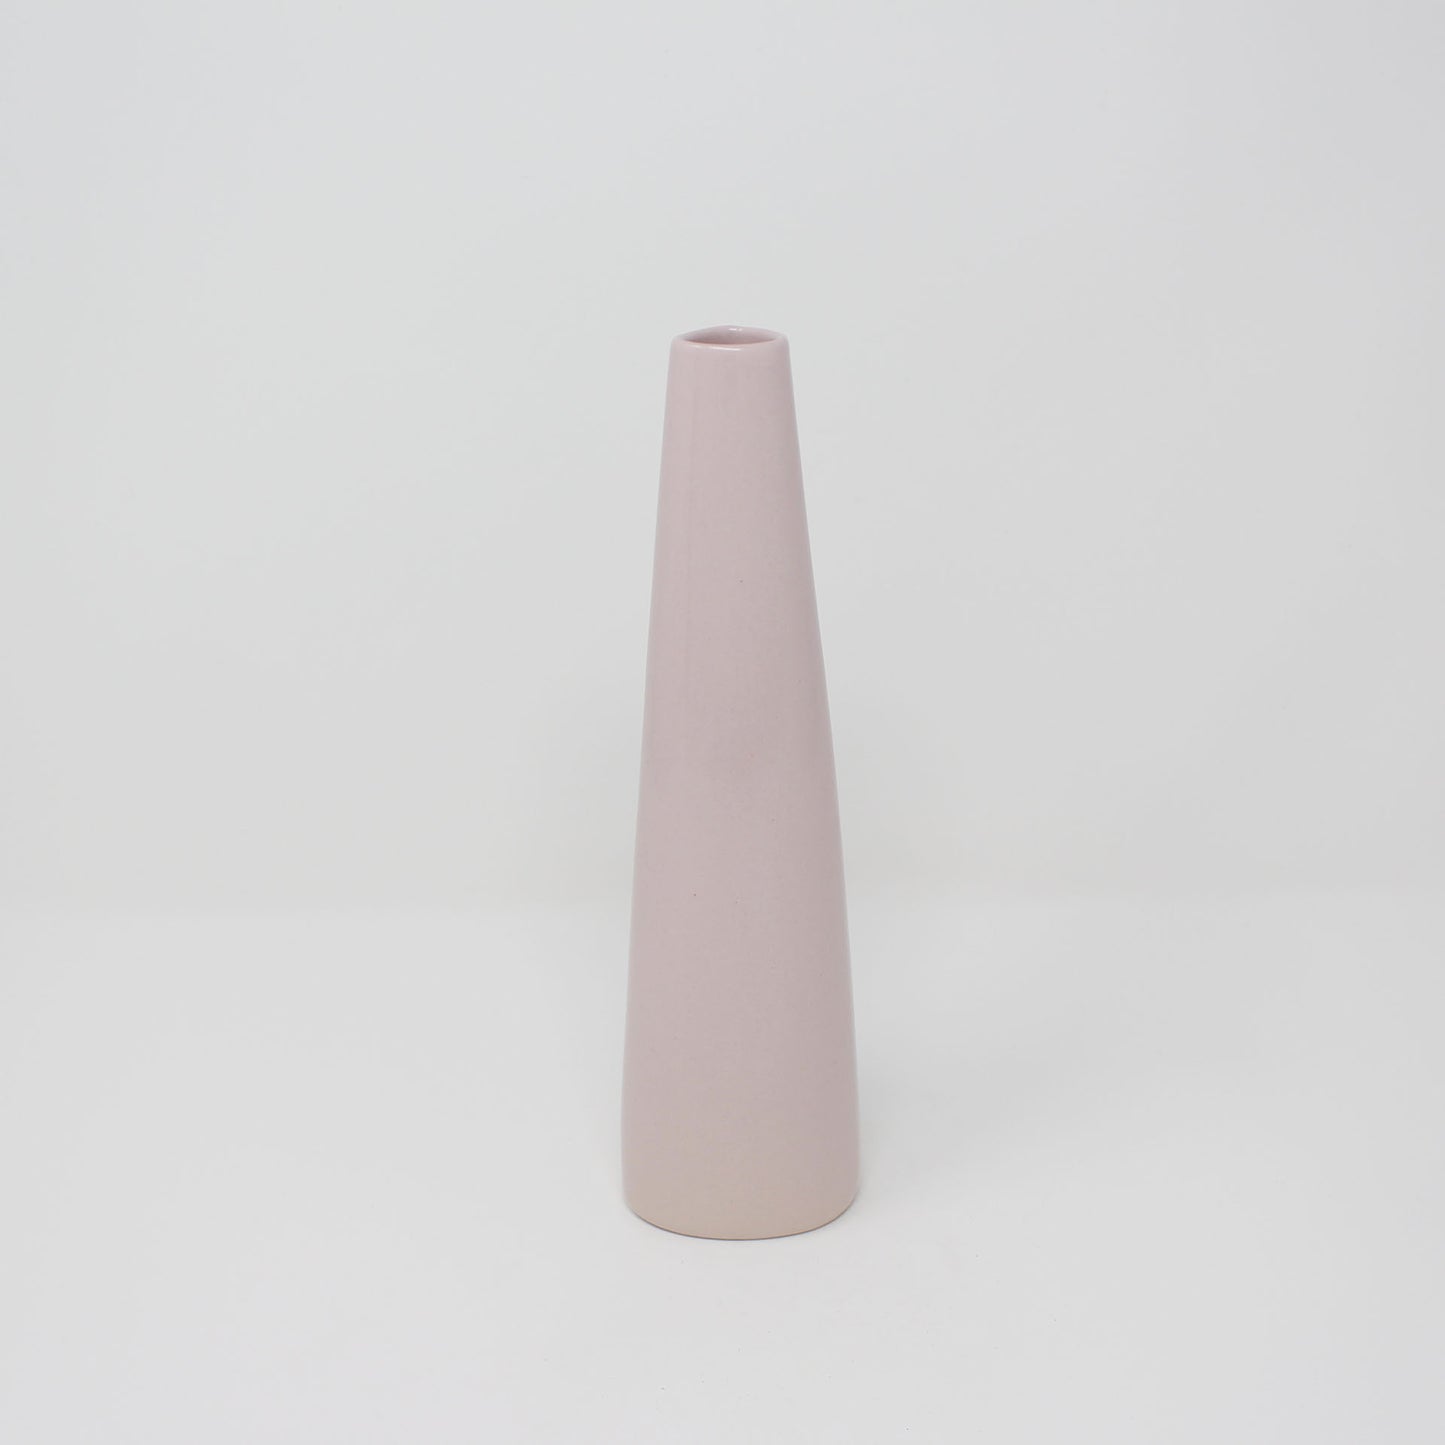 One Color : Vase No. 6 Tallest